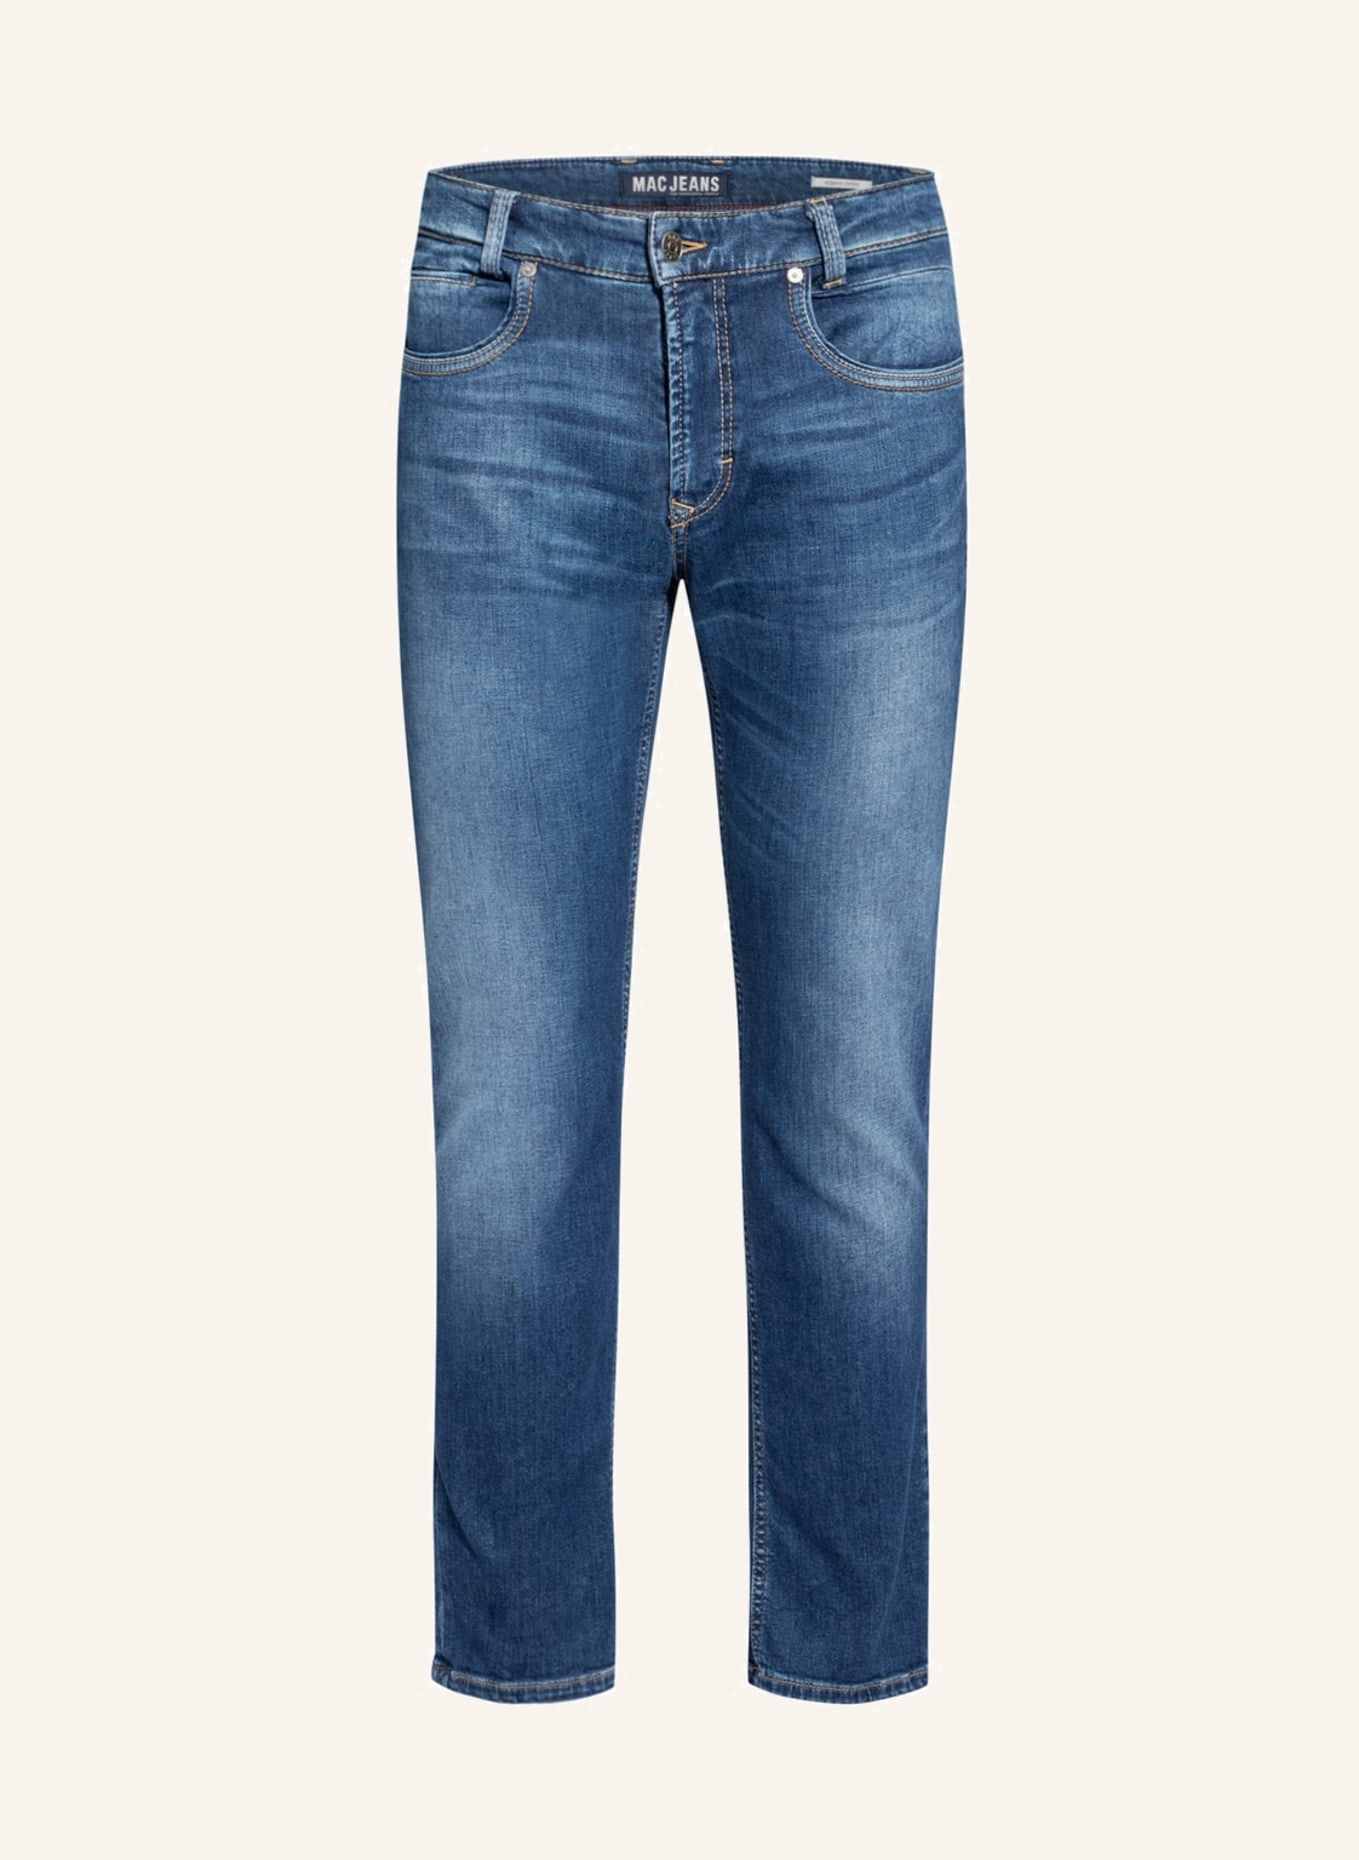 MAC Jeans ARNE PIPE Slim Fit, Farbe: H662 old legend wash (Bild 1)